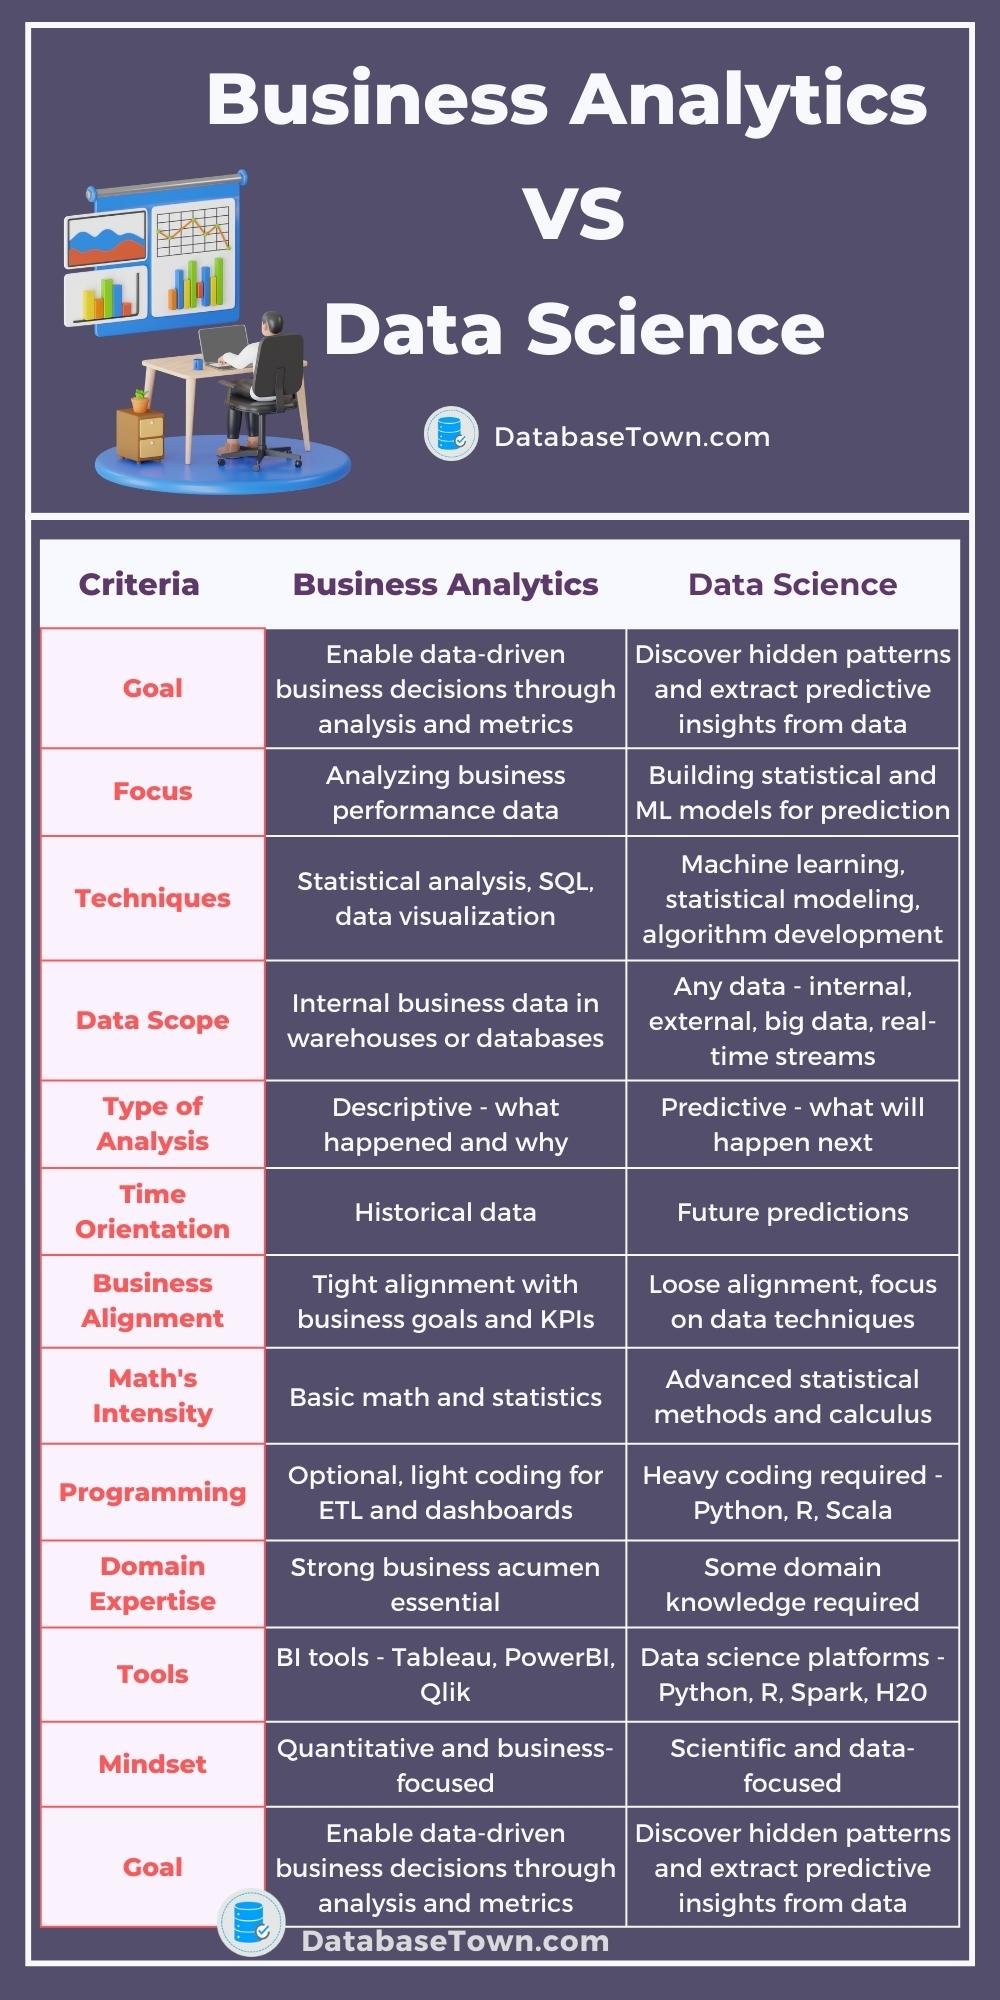 Business Analytics VS Data Science 